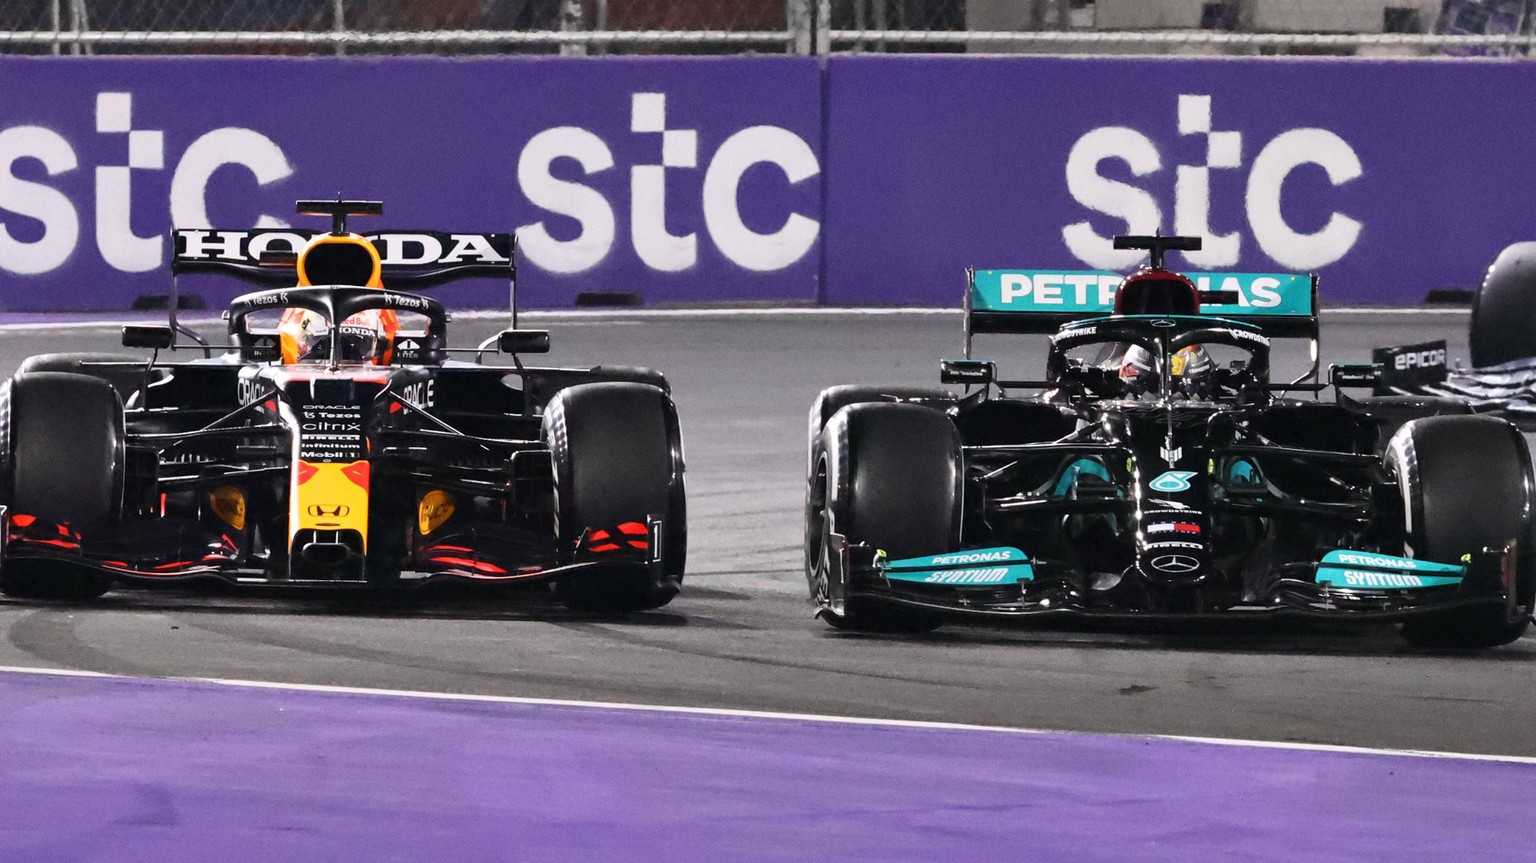 IMAGO / Motorsport Images

Formula 1 2021: Saudi Arabia GP JEDDAH STREET CIRCUIT, SAUDI ARABIA - DECEMBER 05: Sir Lewis Hamilton, Mercedes W12, battles with Max Verstappen, Red Bull Racing RB16B, ahea ...